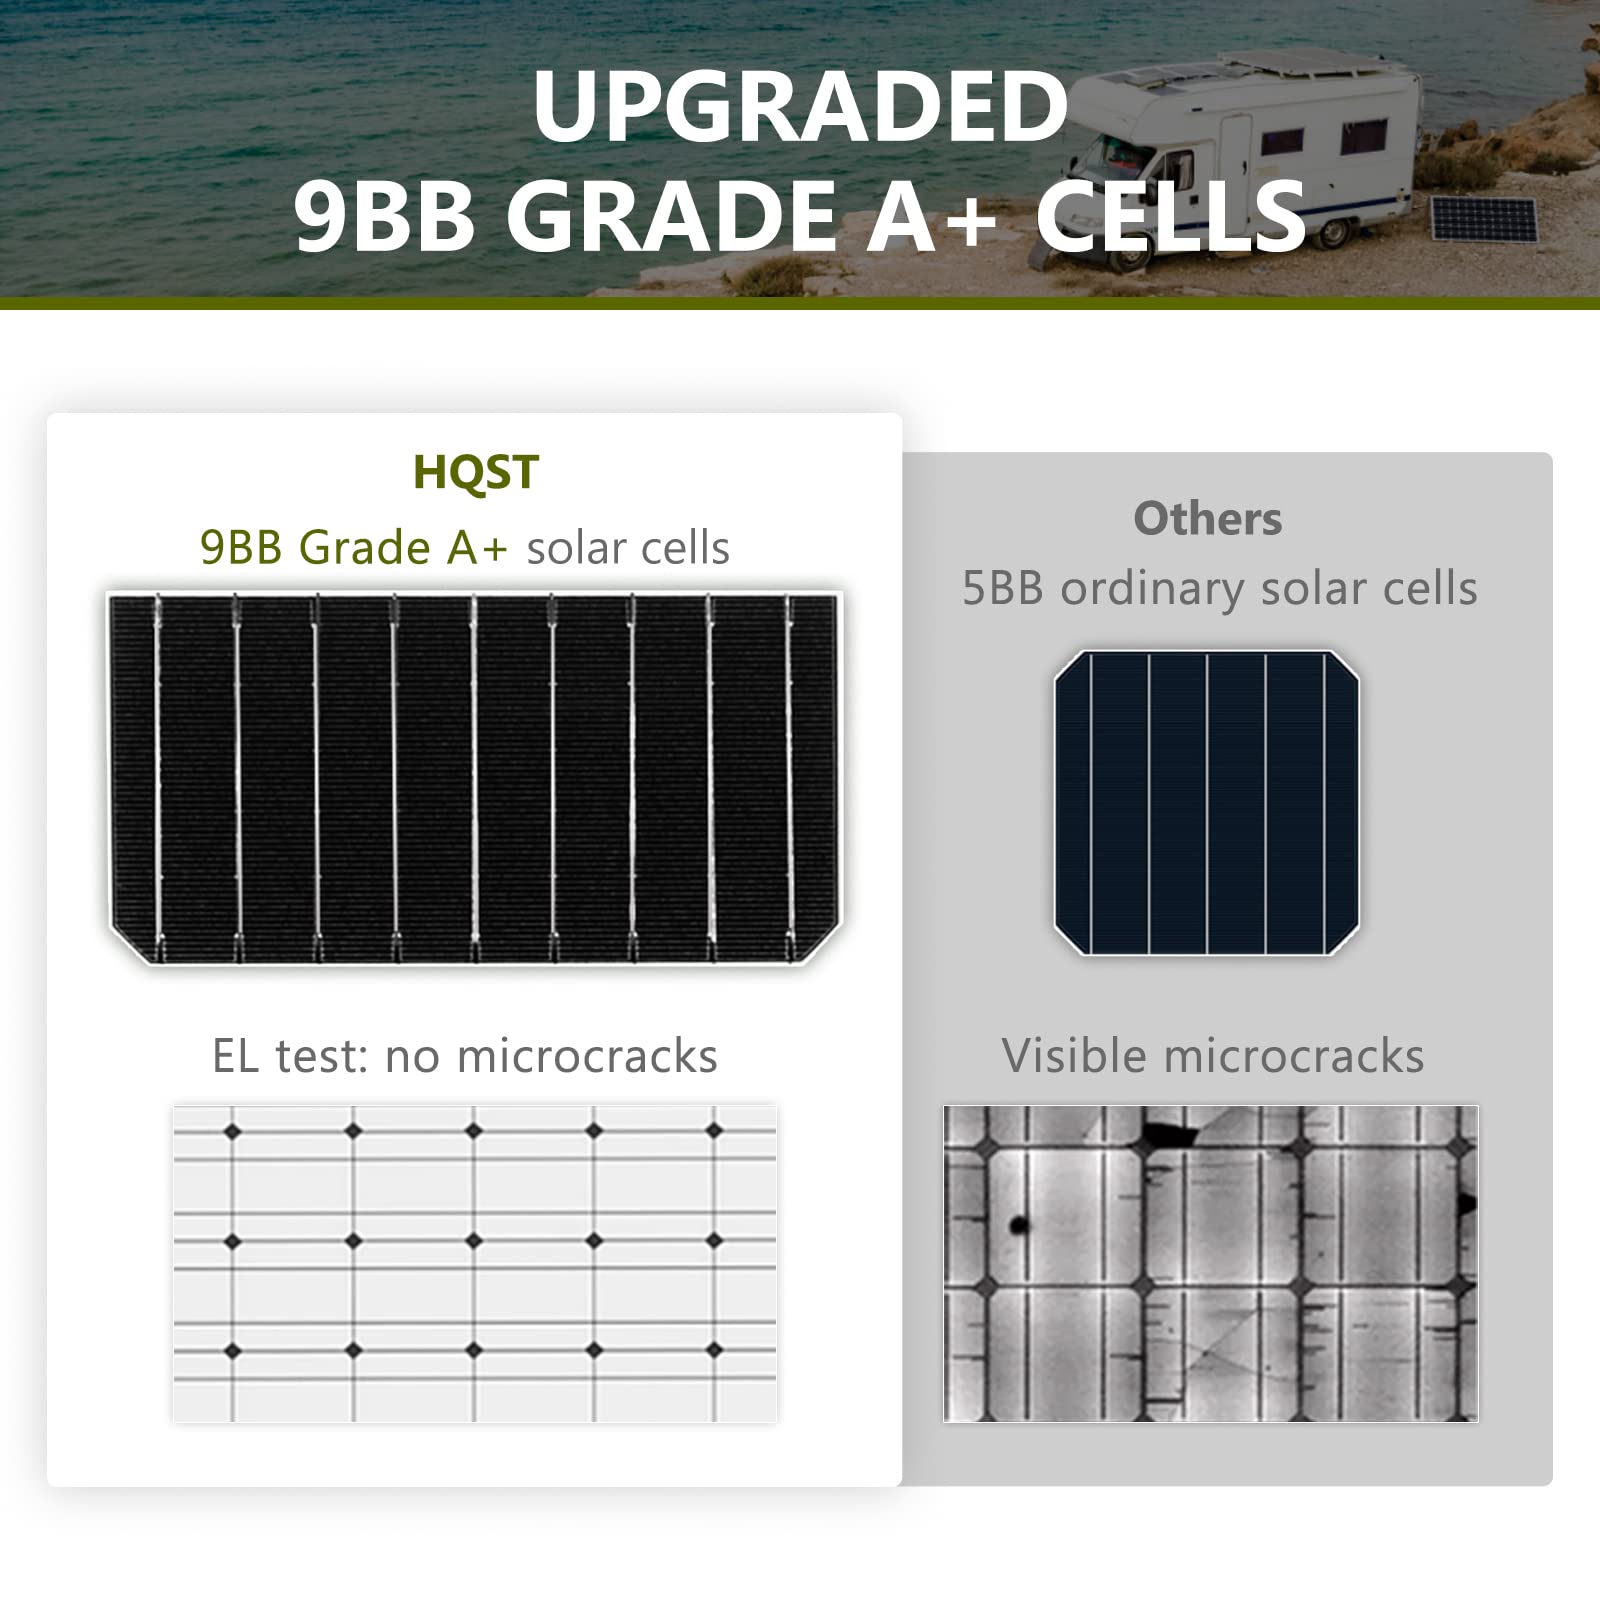 upgraded 9bb grade A+ cells